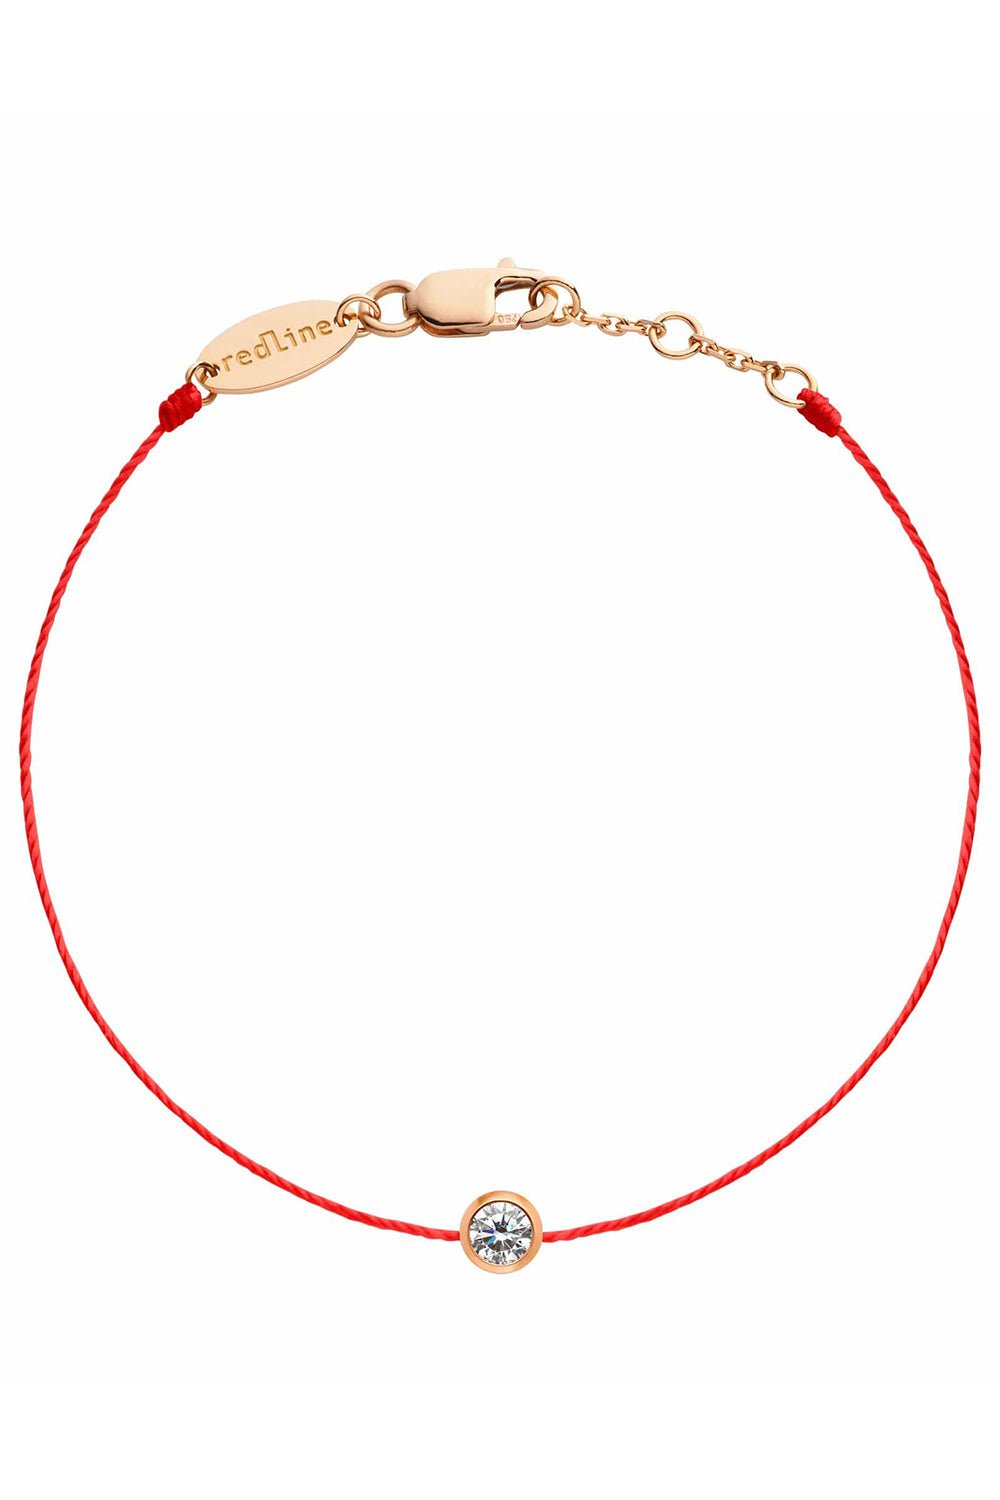 REDLINE-Pure Diamond Red Cord Bracelet-